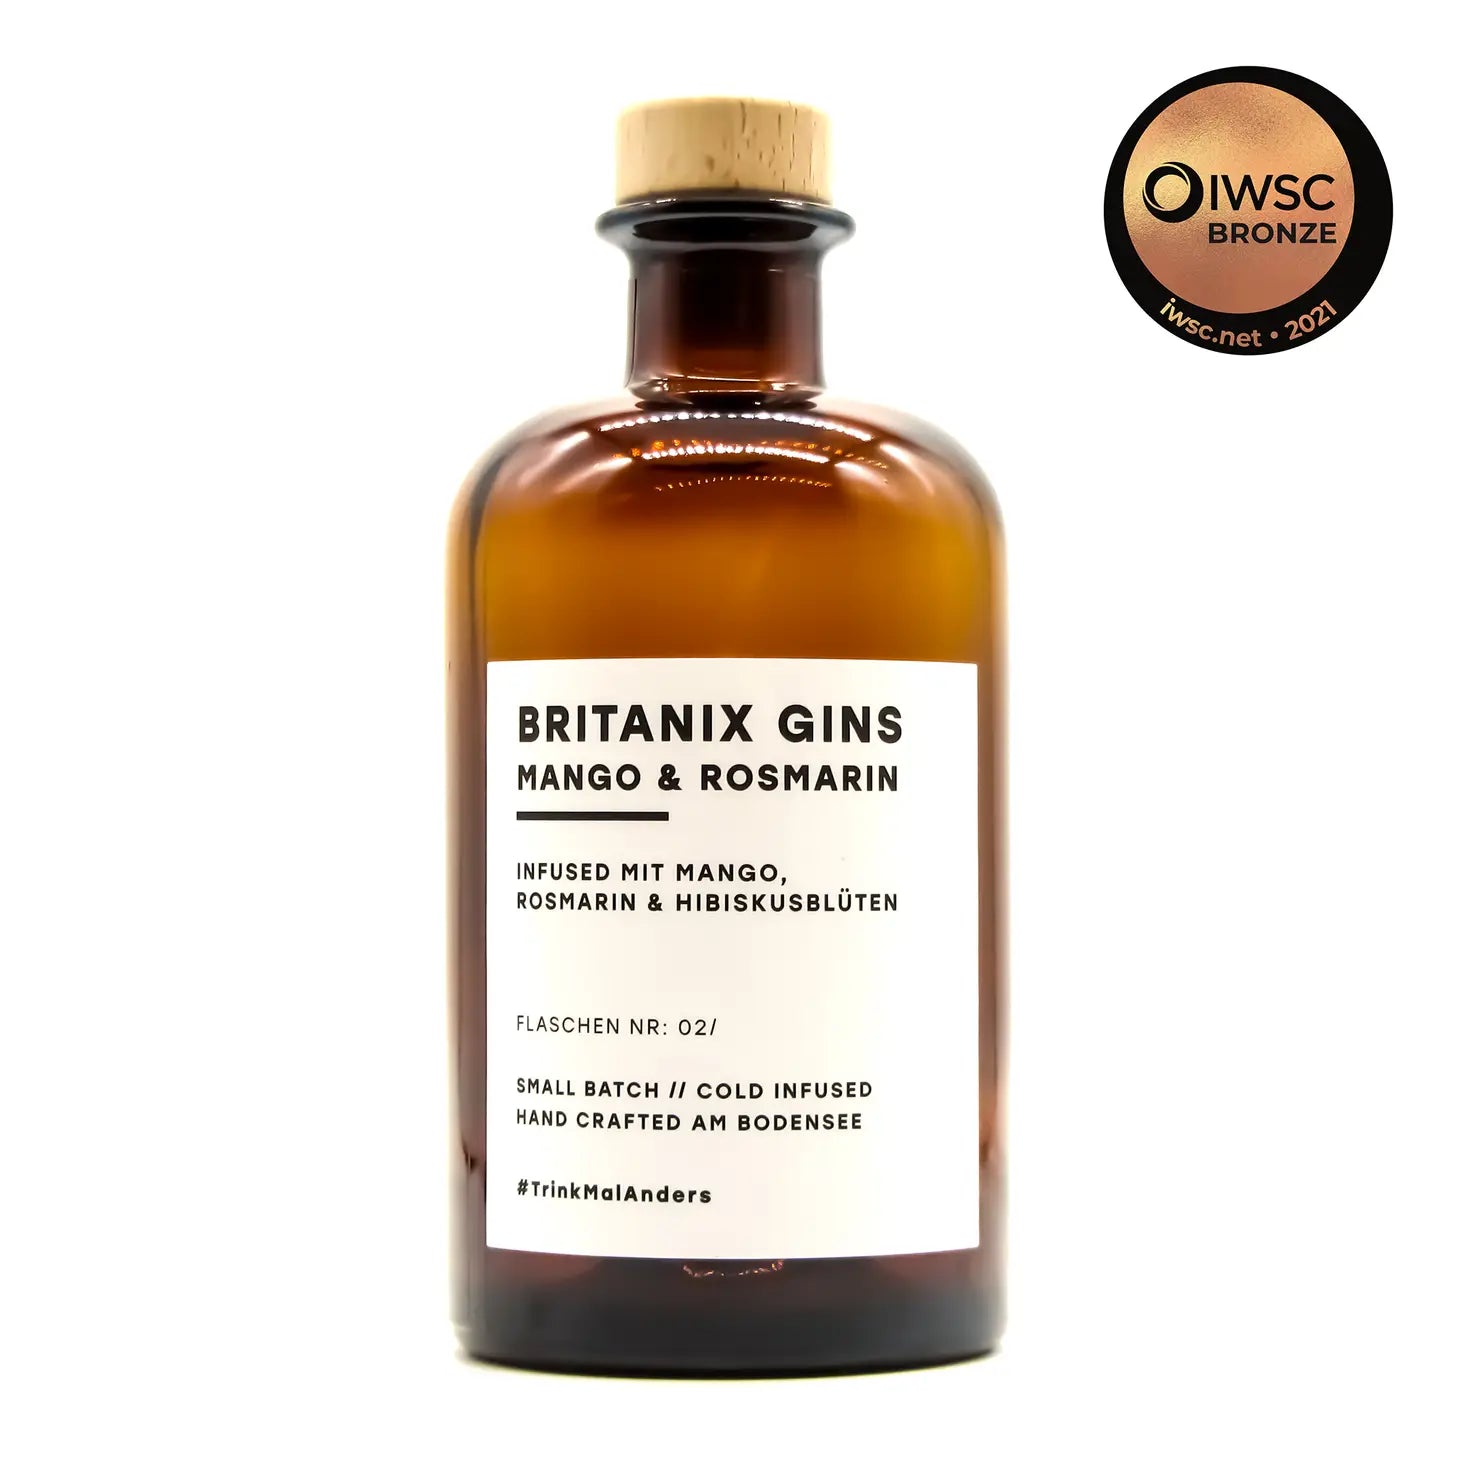 Britanix Gins Mango & Rosmarin Gin 500 ml